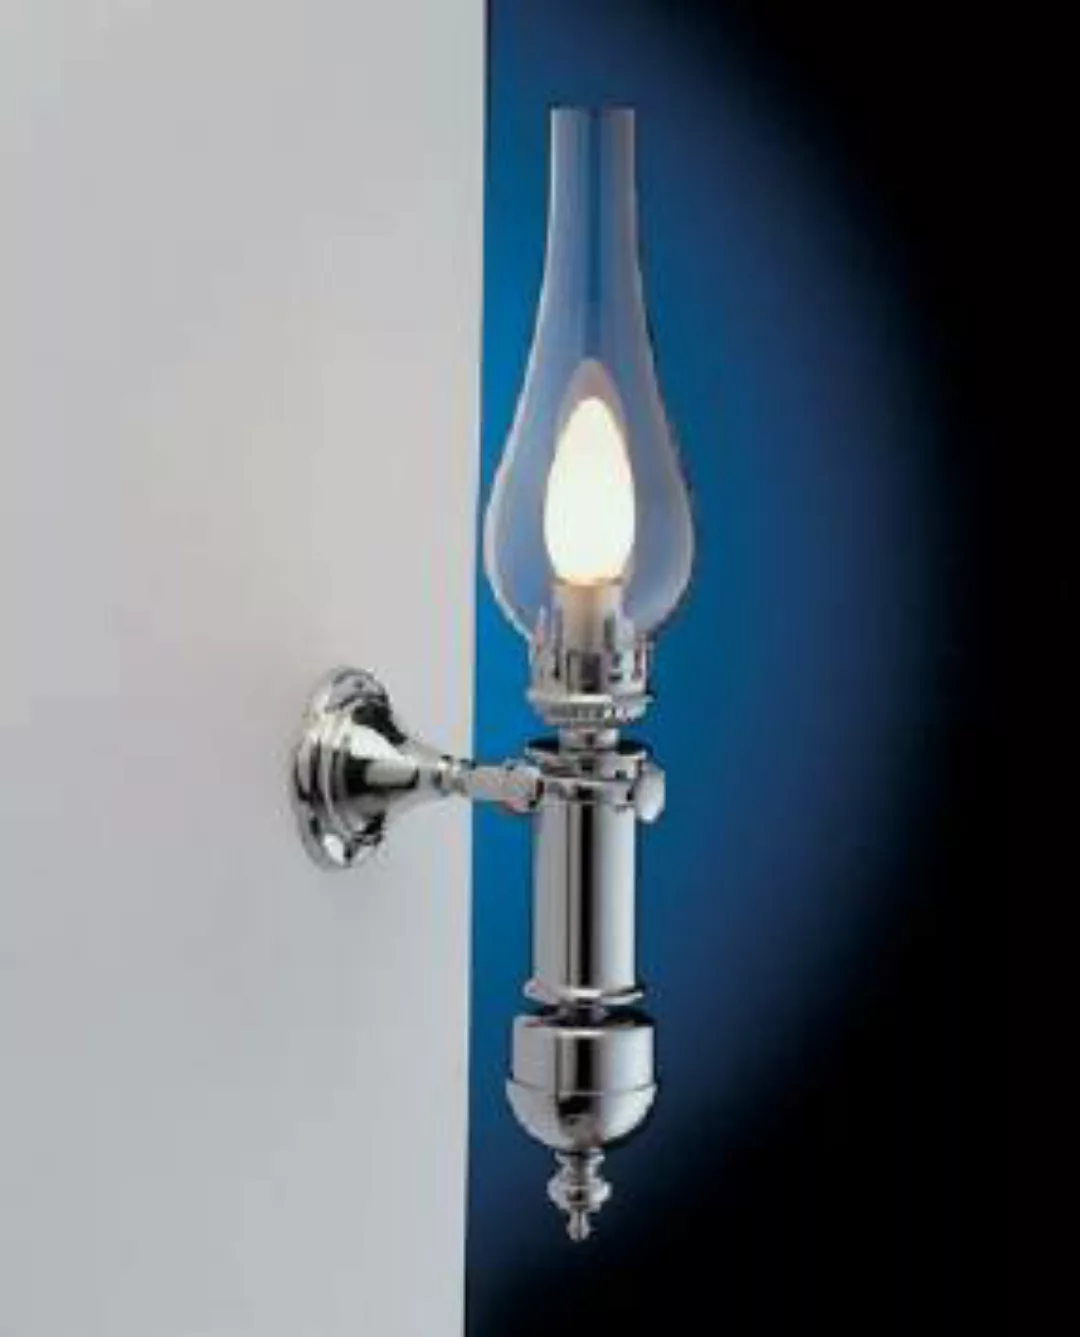 Stilvolle Wandlampe GRETA Chrom Jugendstil Bad Flur günstig online kaufen